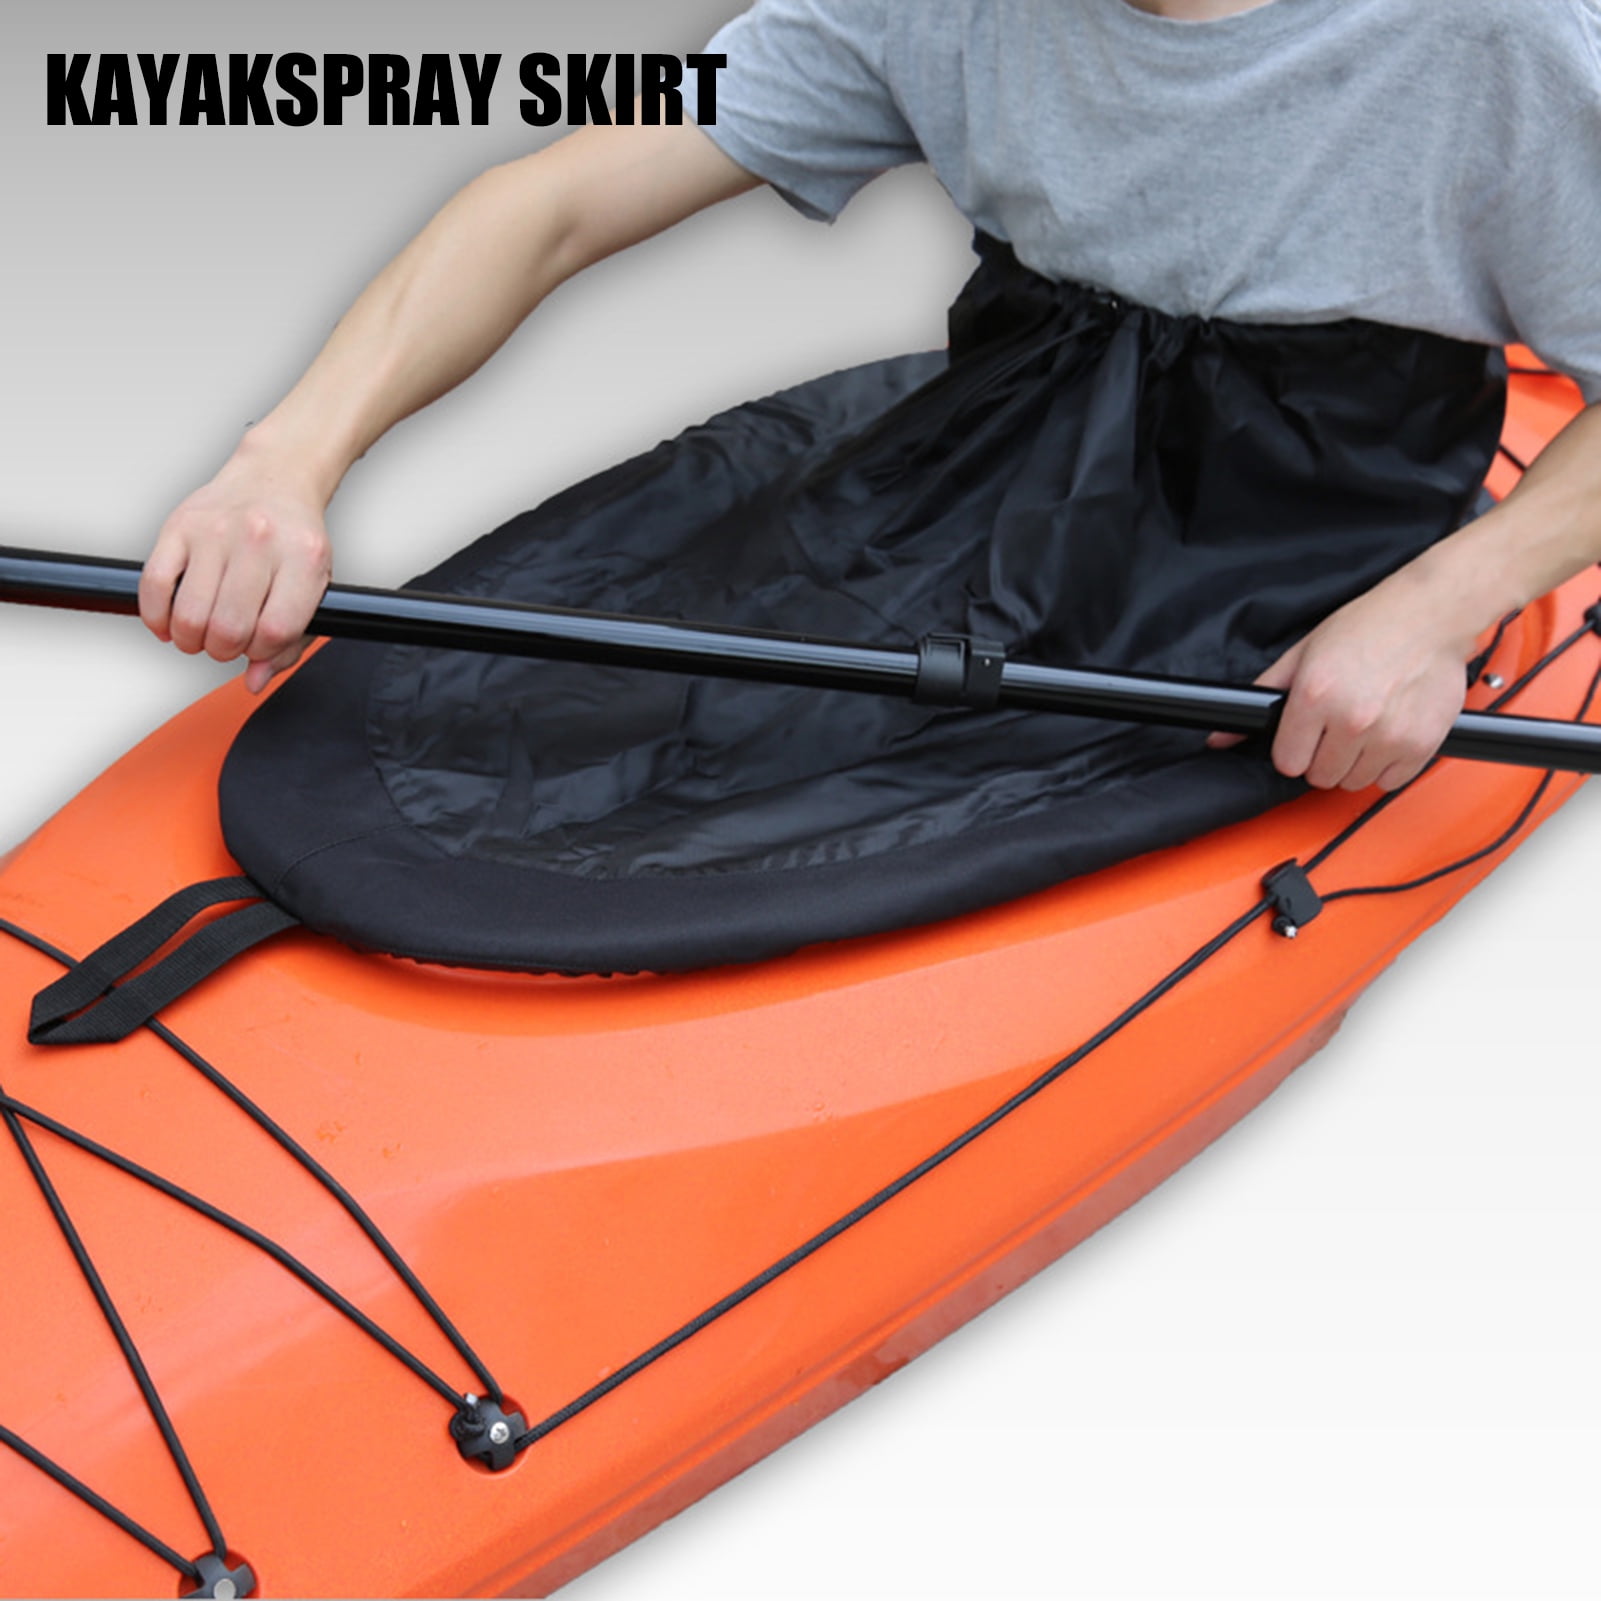 for Kayak Length 95-105/37.4-41.3IN Explopur Kayak Spray Skirt Blue Universal Adjustable Sport Waterproof Nylon Deck Sprayskirt Cover 